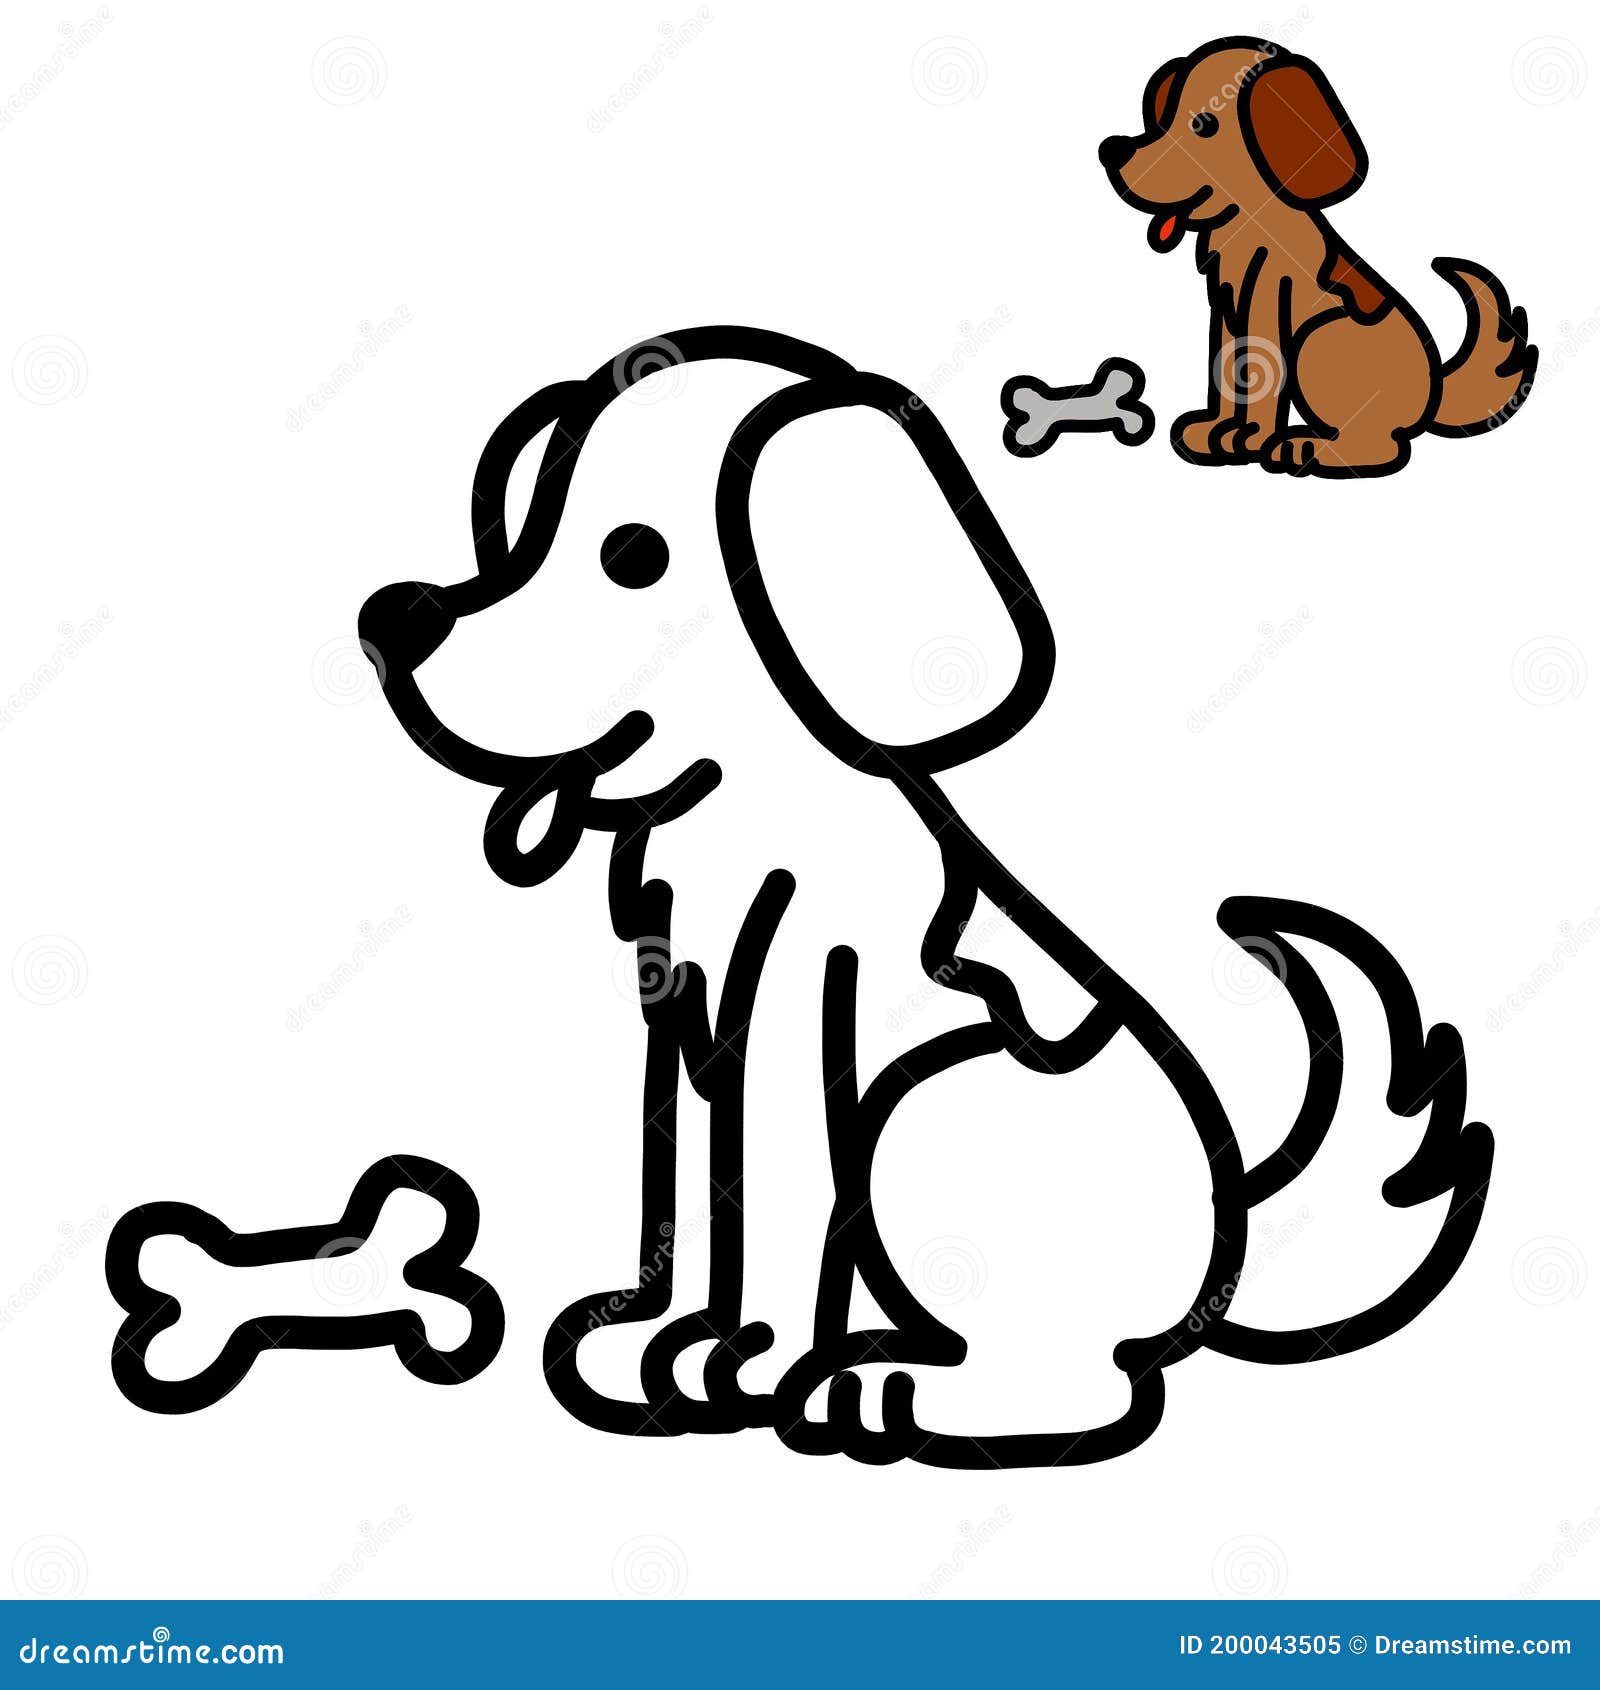 Dog Sketchbook for Kids ages 4-8 Blank Paper for Drawing.